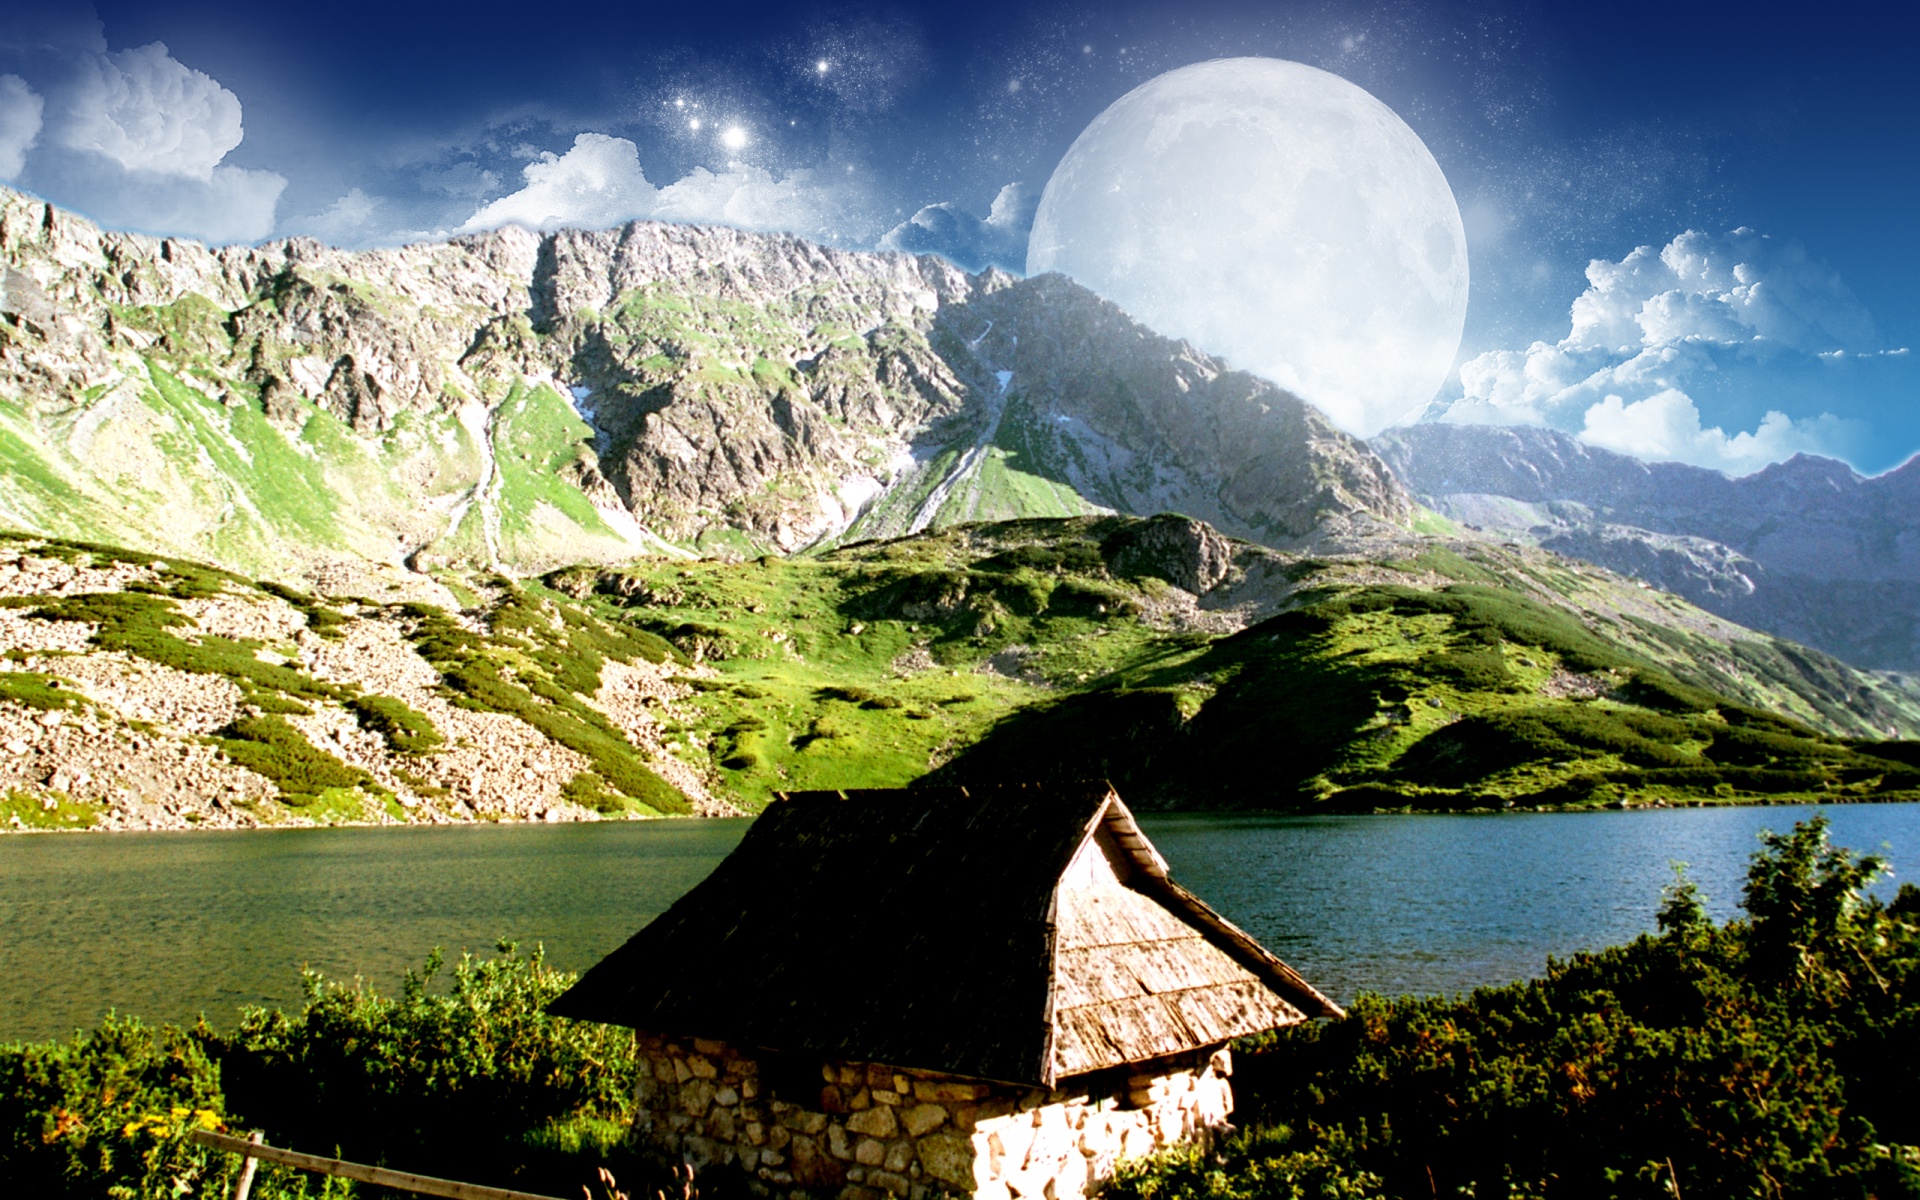 Previous, Photoshop - Dreamy mountain wallpaper